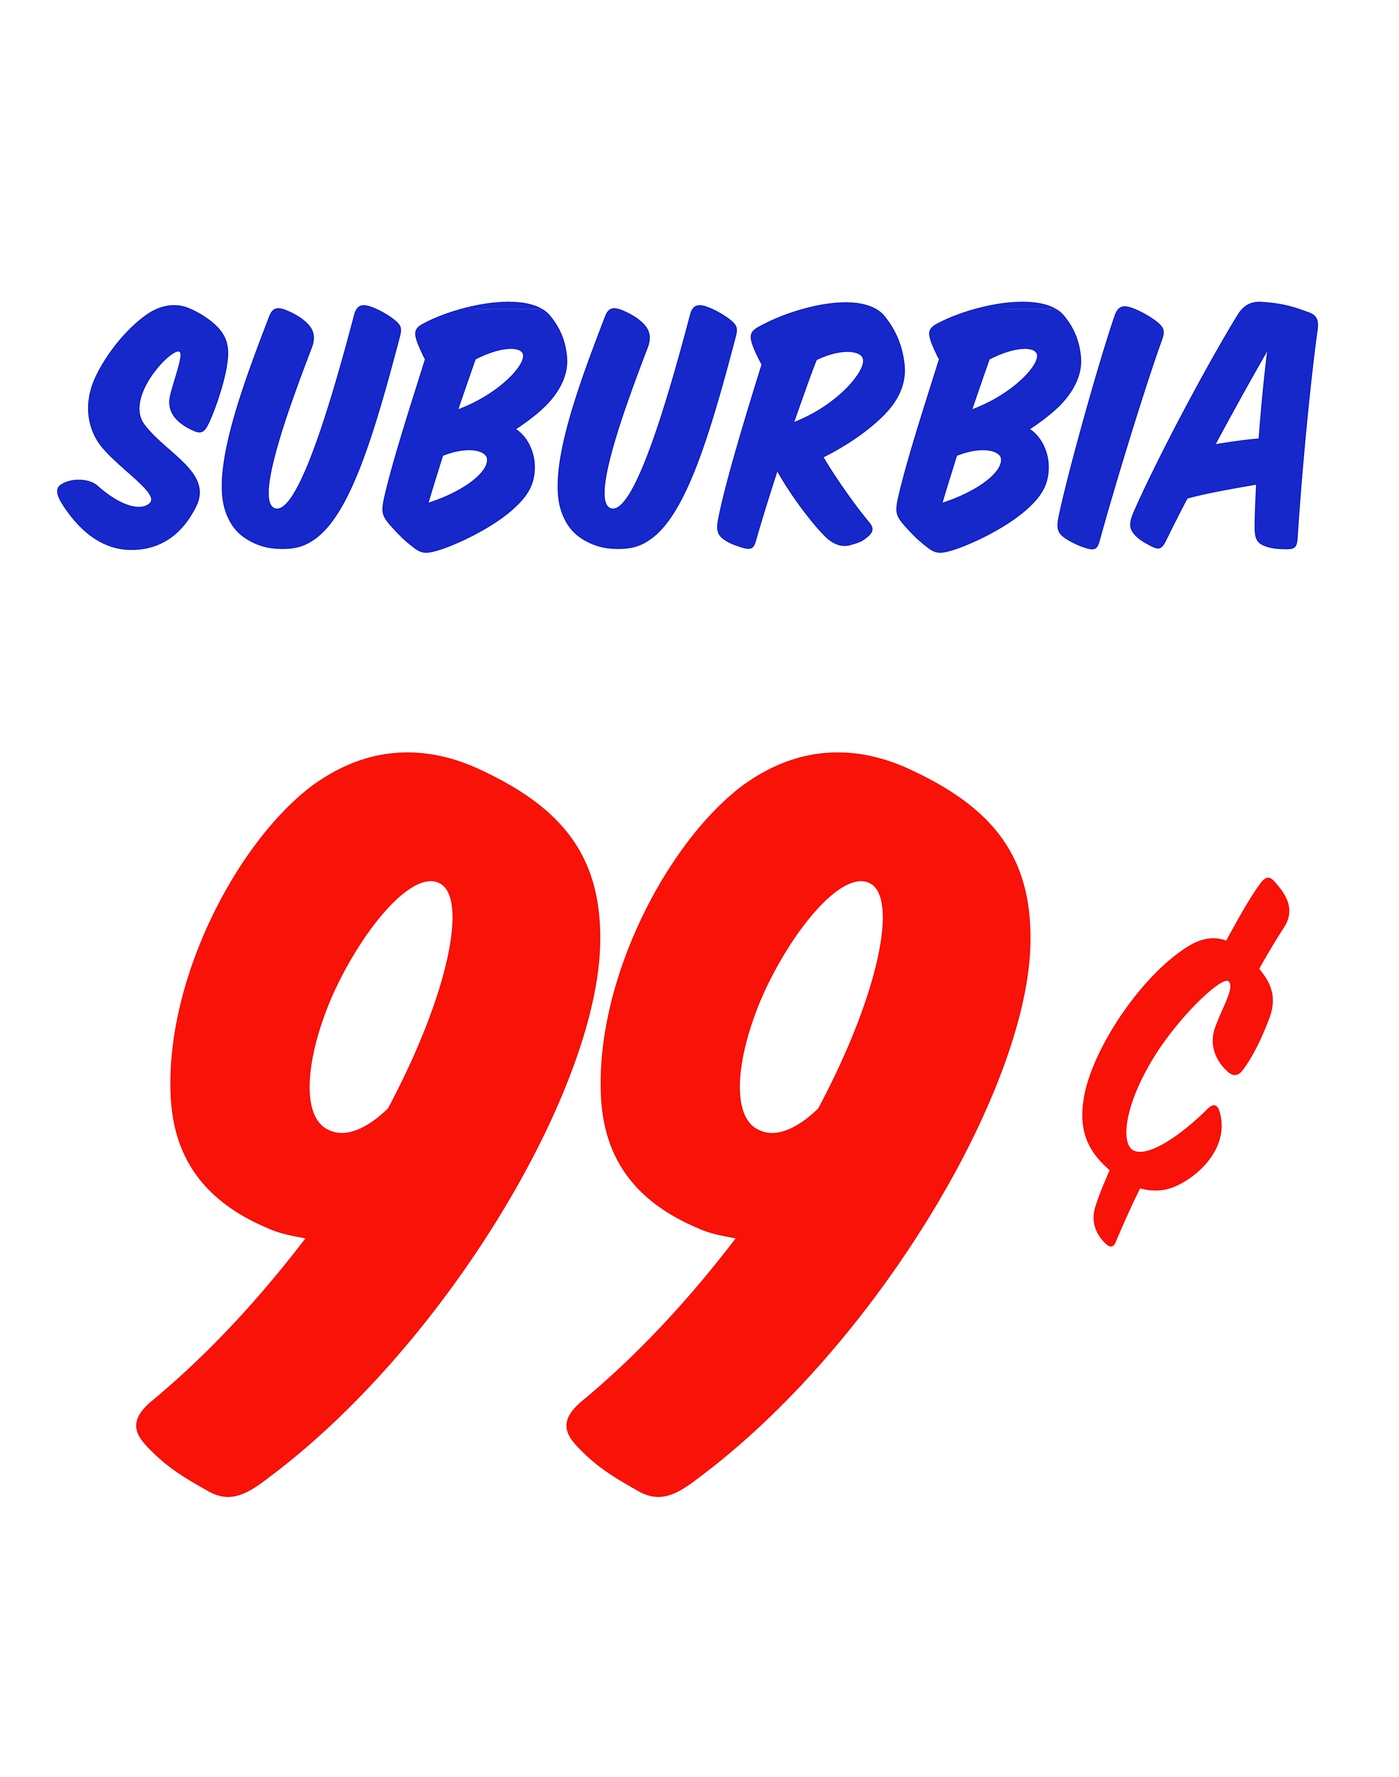 9_Suburbia